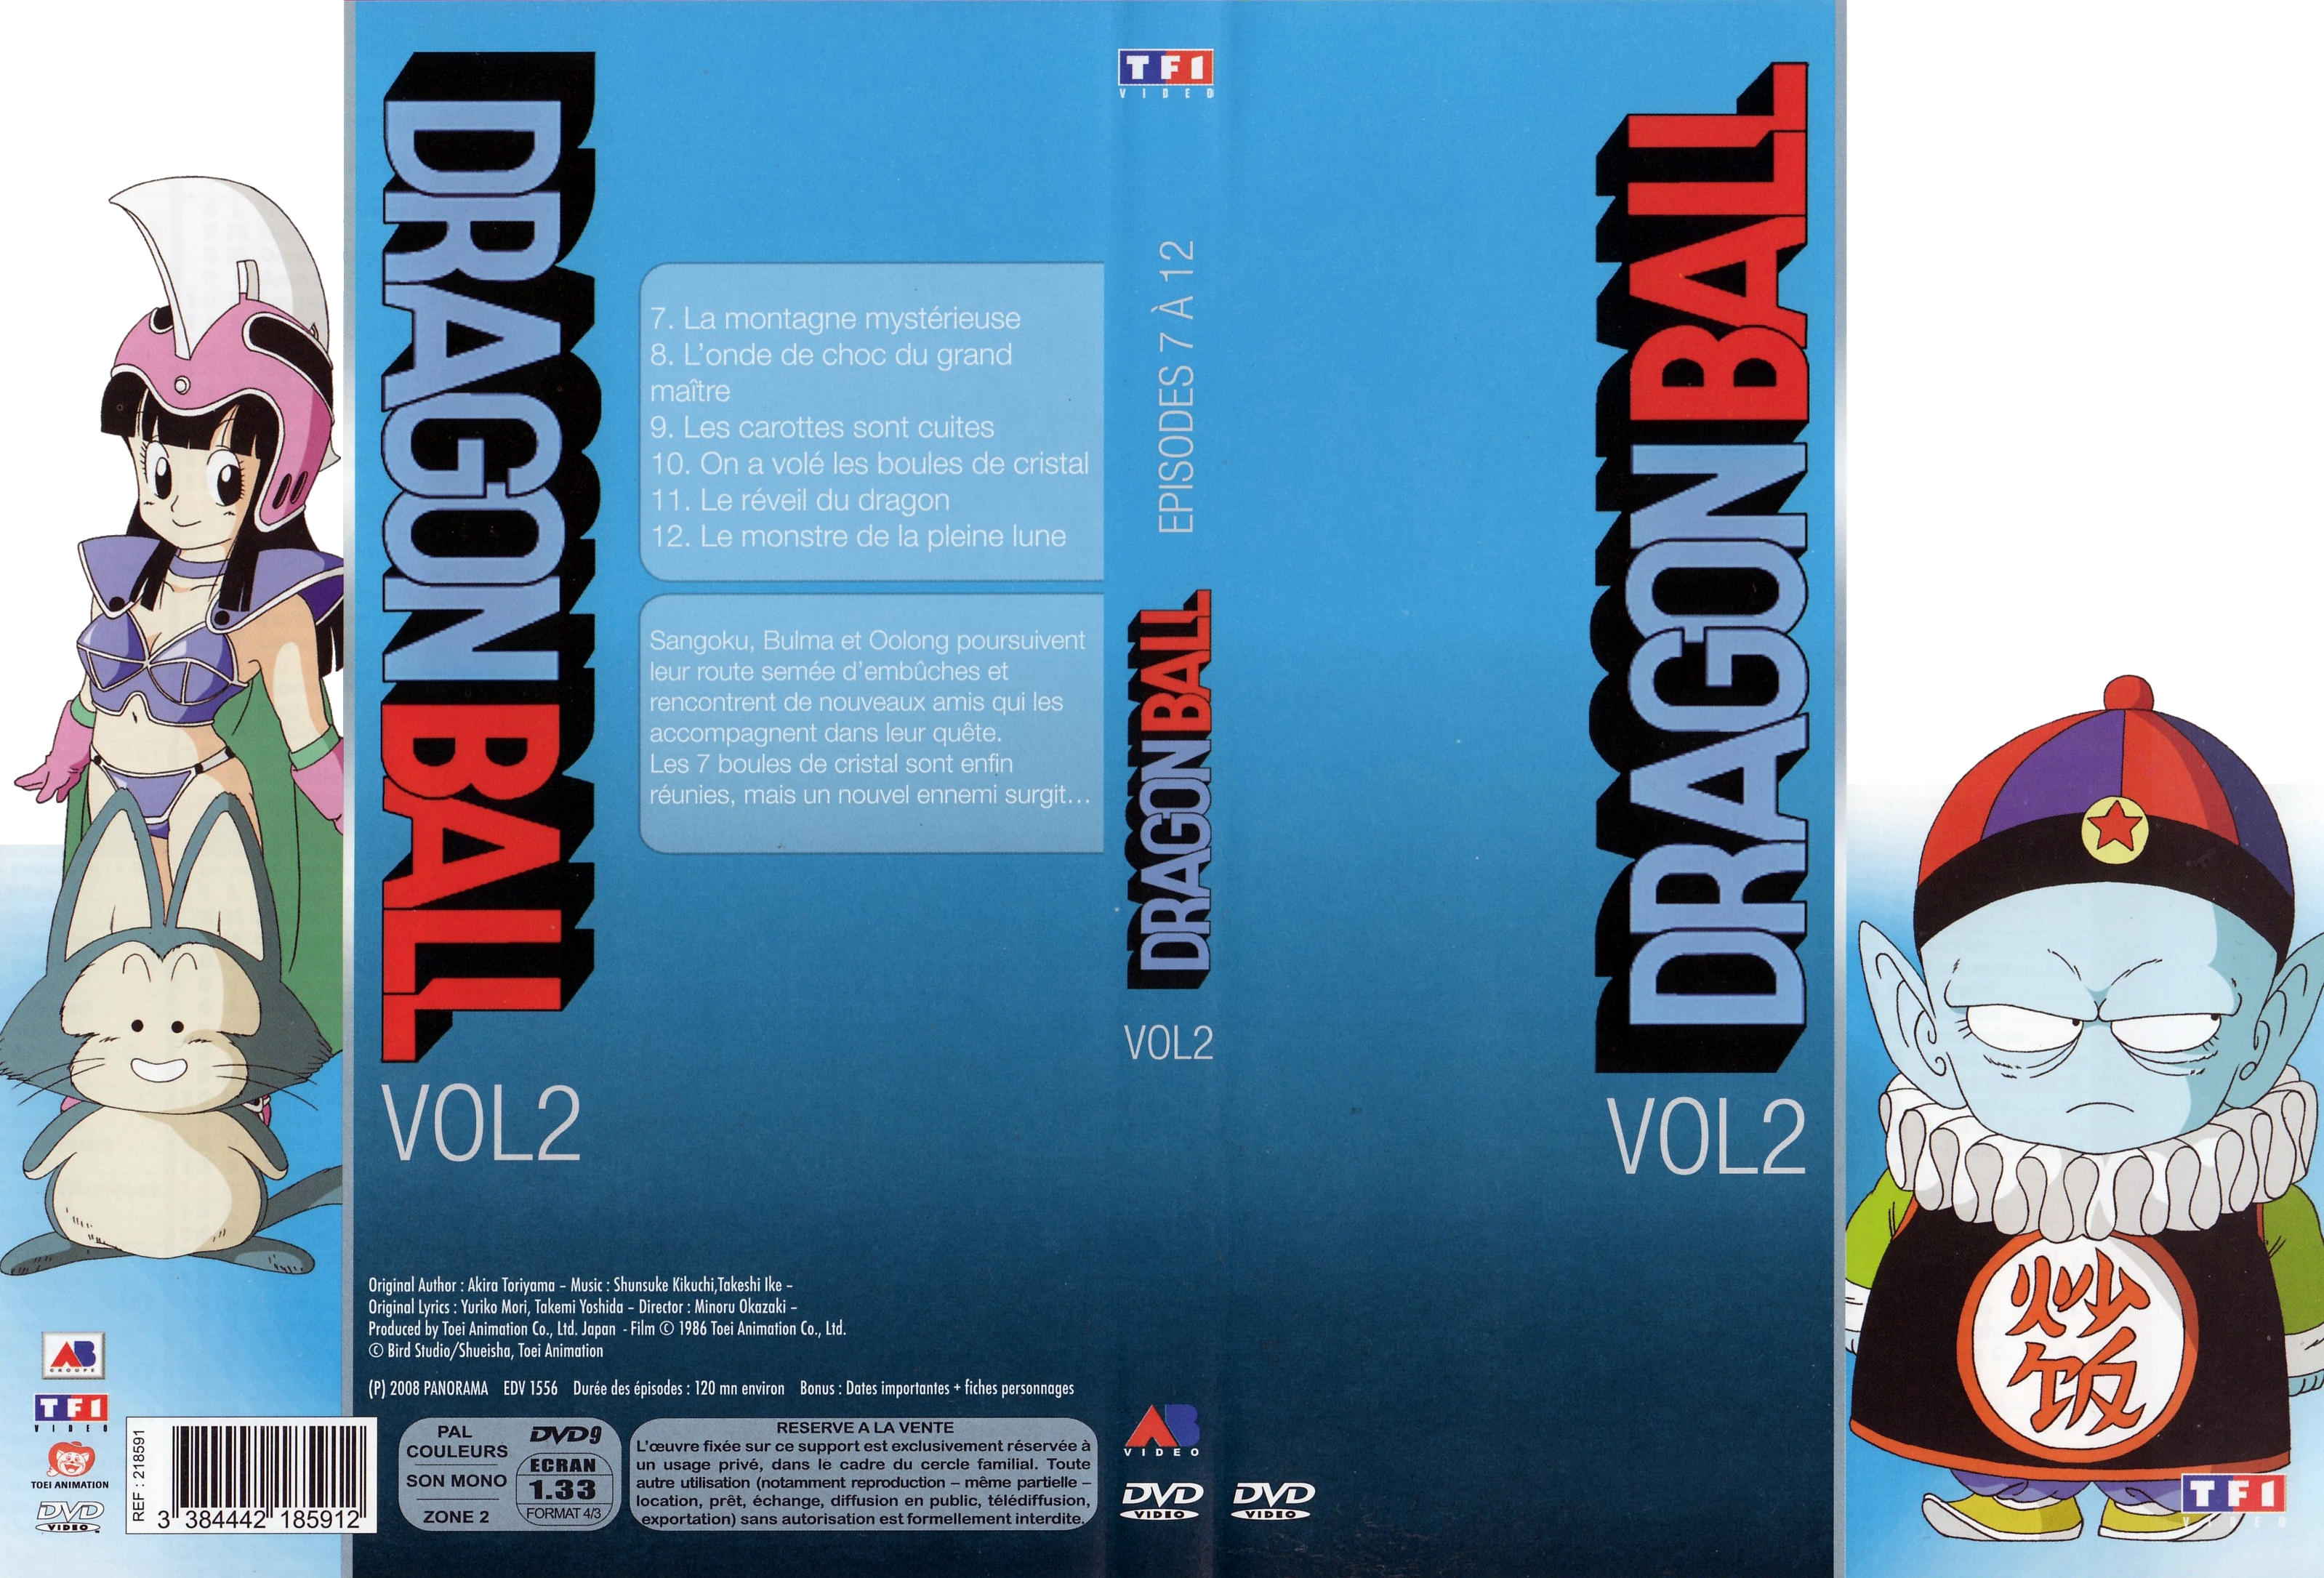 Jaquette DVD Dragon ball vol 02 v2